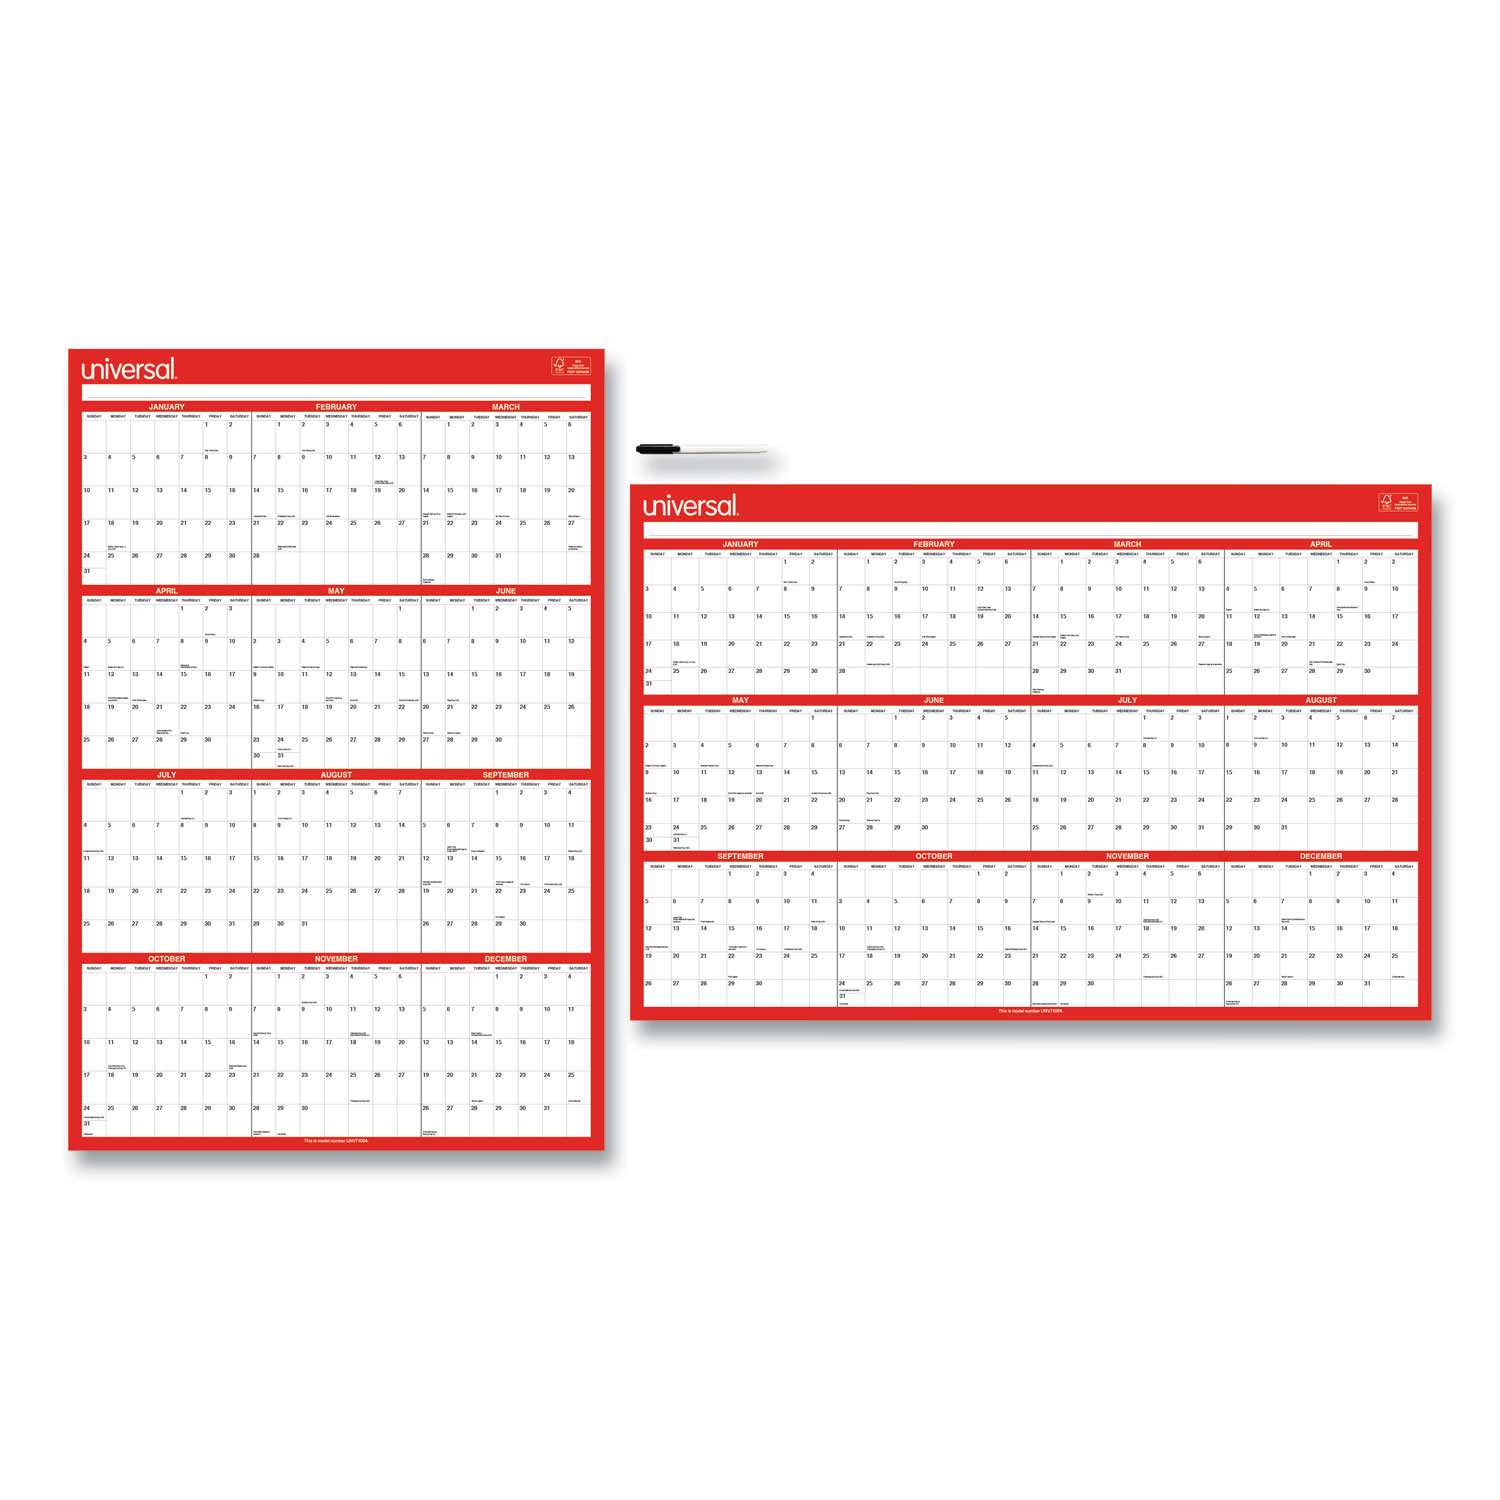  Universal 71004 Erasable Wall Calendar, 24 x 36, White/Red, 2021 (UNV71004) 